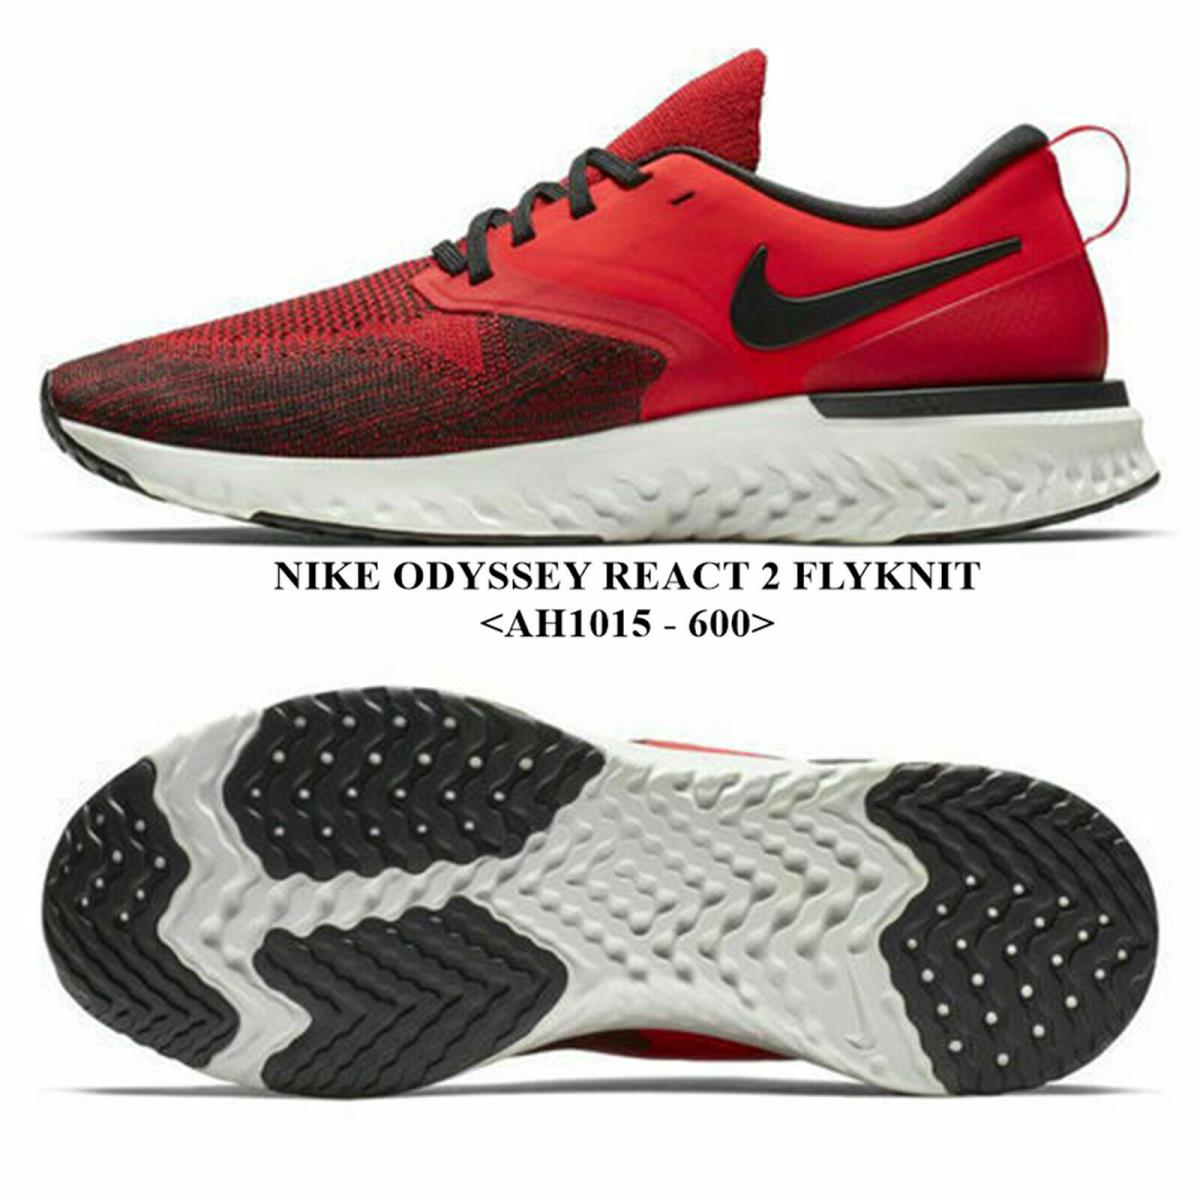 Nike Odyssey React 2 Flyknit AH1015 - 600 Men`s Running Shoes.new - UNIVERSITY RED / BLACK , UNIVERSITY RED / BLACK Manufacturer